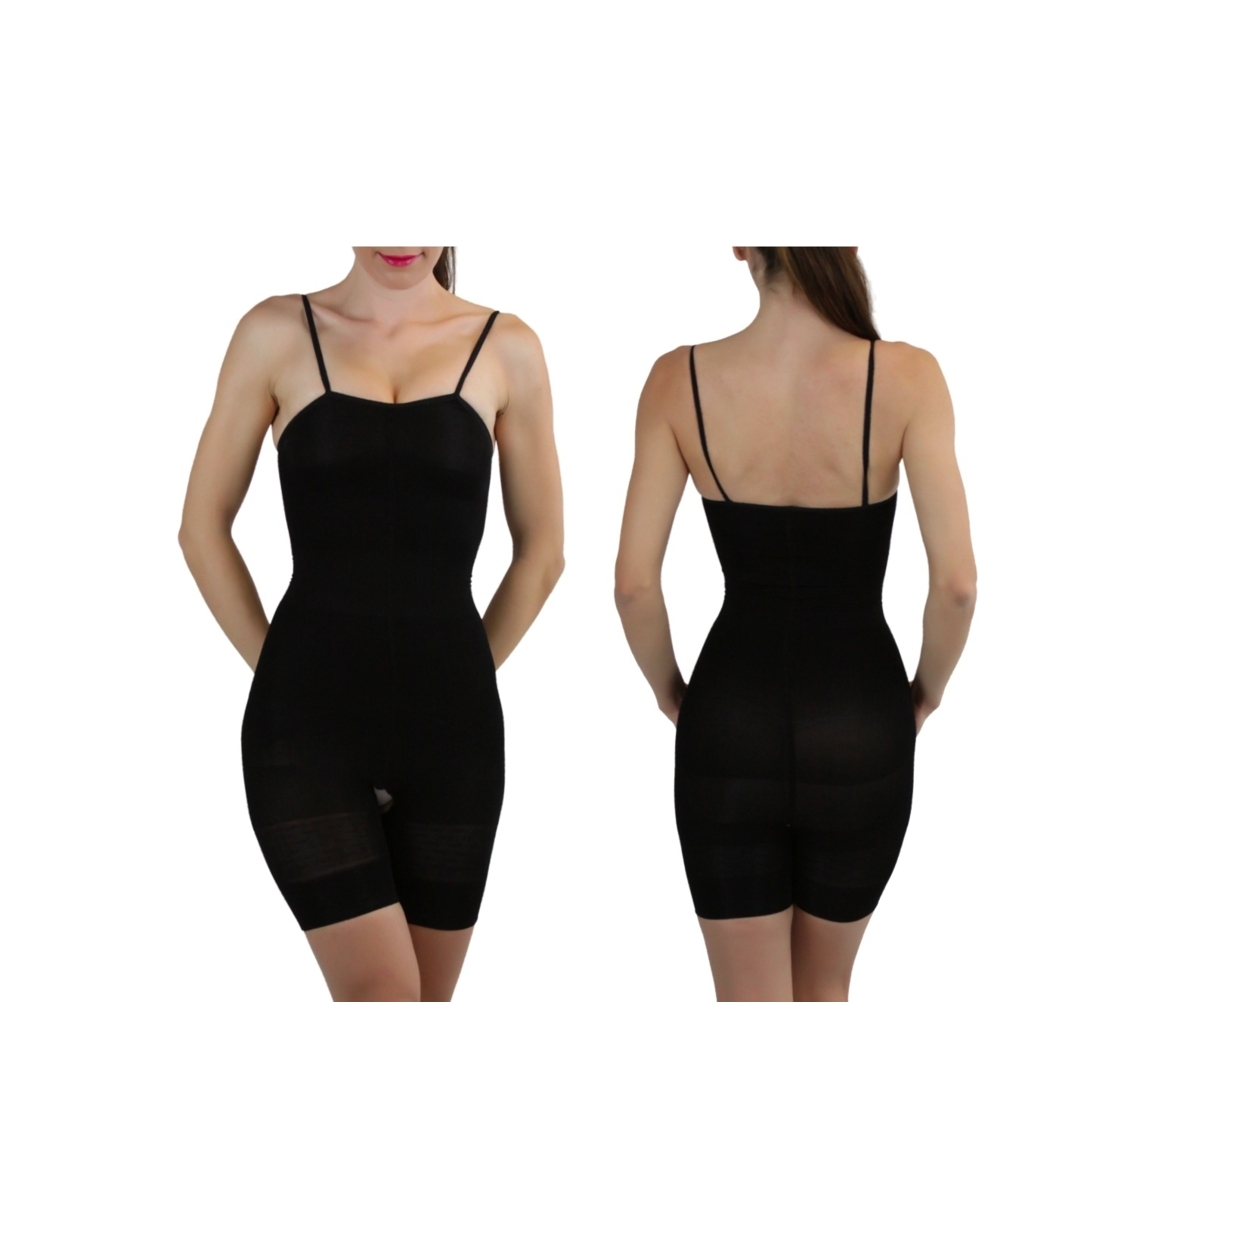 Women's Slimming Body Suit - Black, L